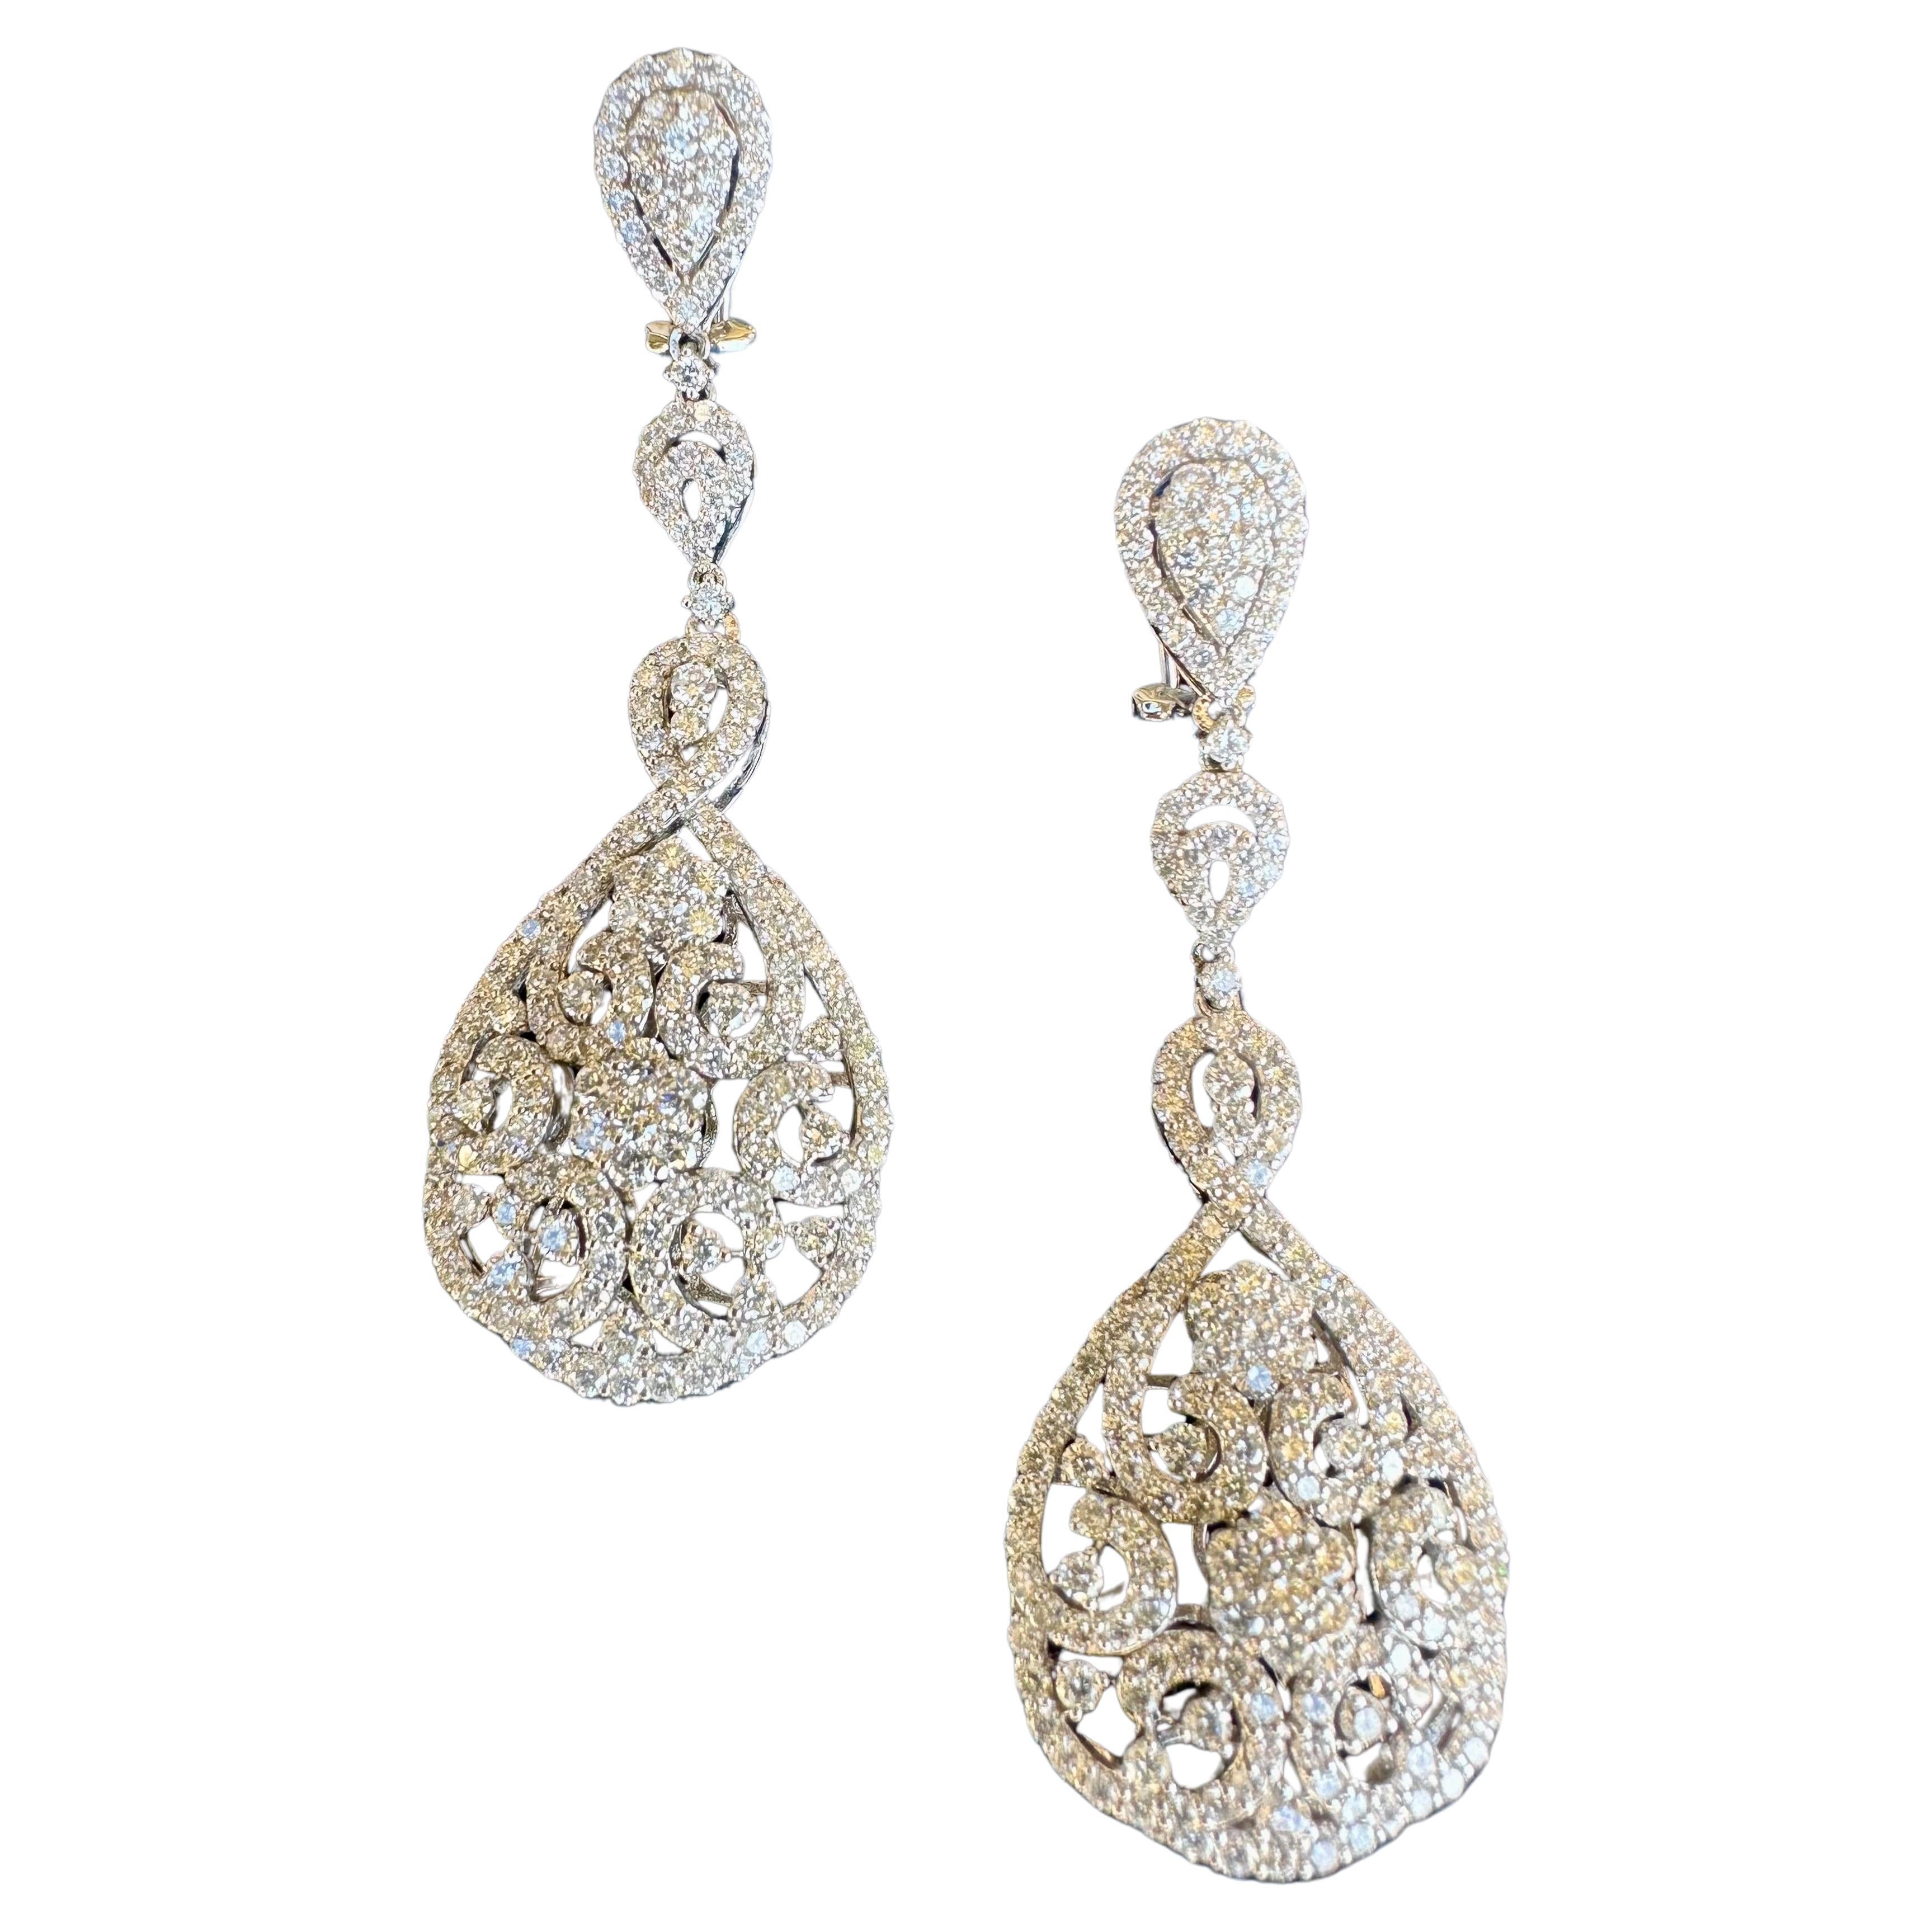  Elegant 15 Carat Diamond Pear Shaped Cluster Drop Earrings 18 Karat White Gold For Sale